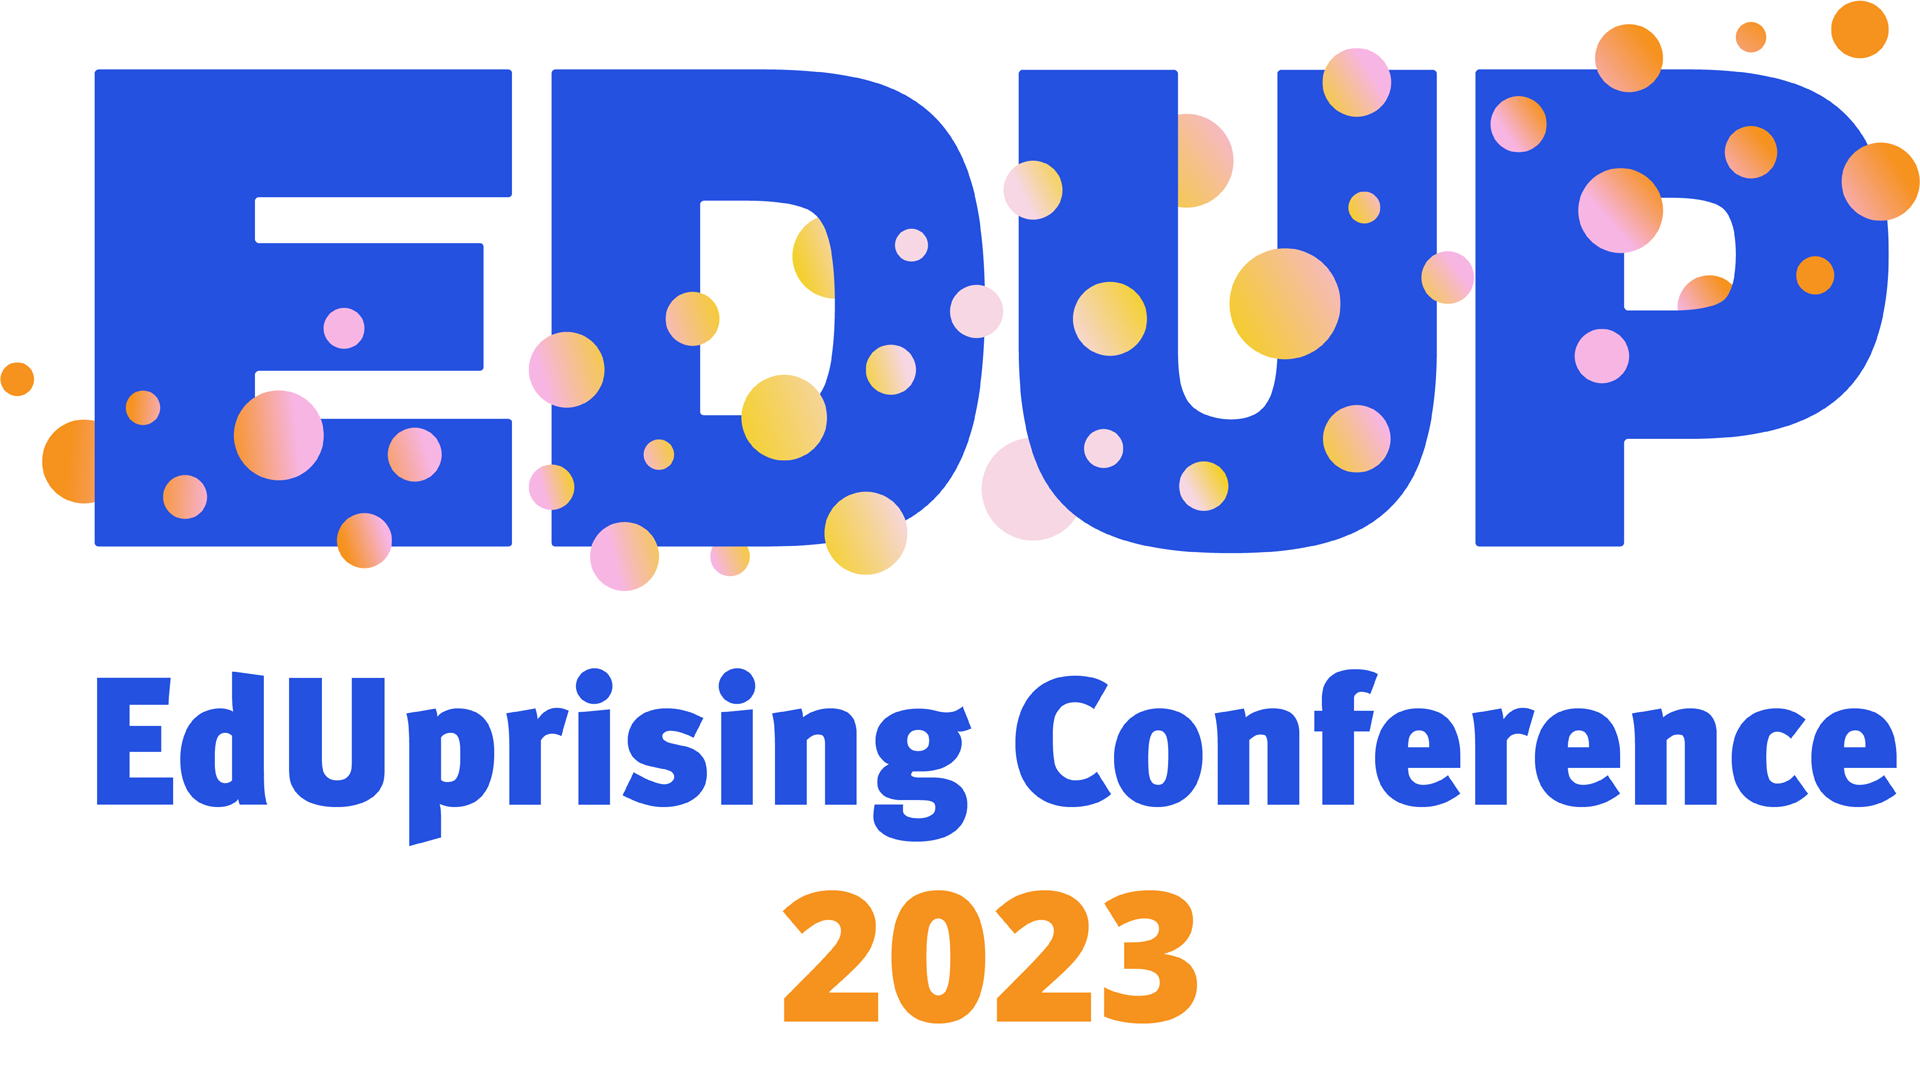 EdUp EdUprising Conference 2023